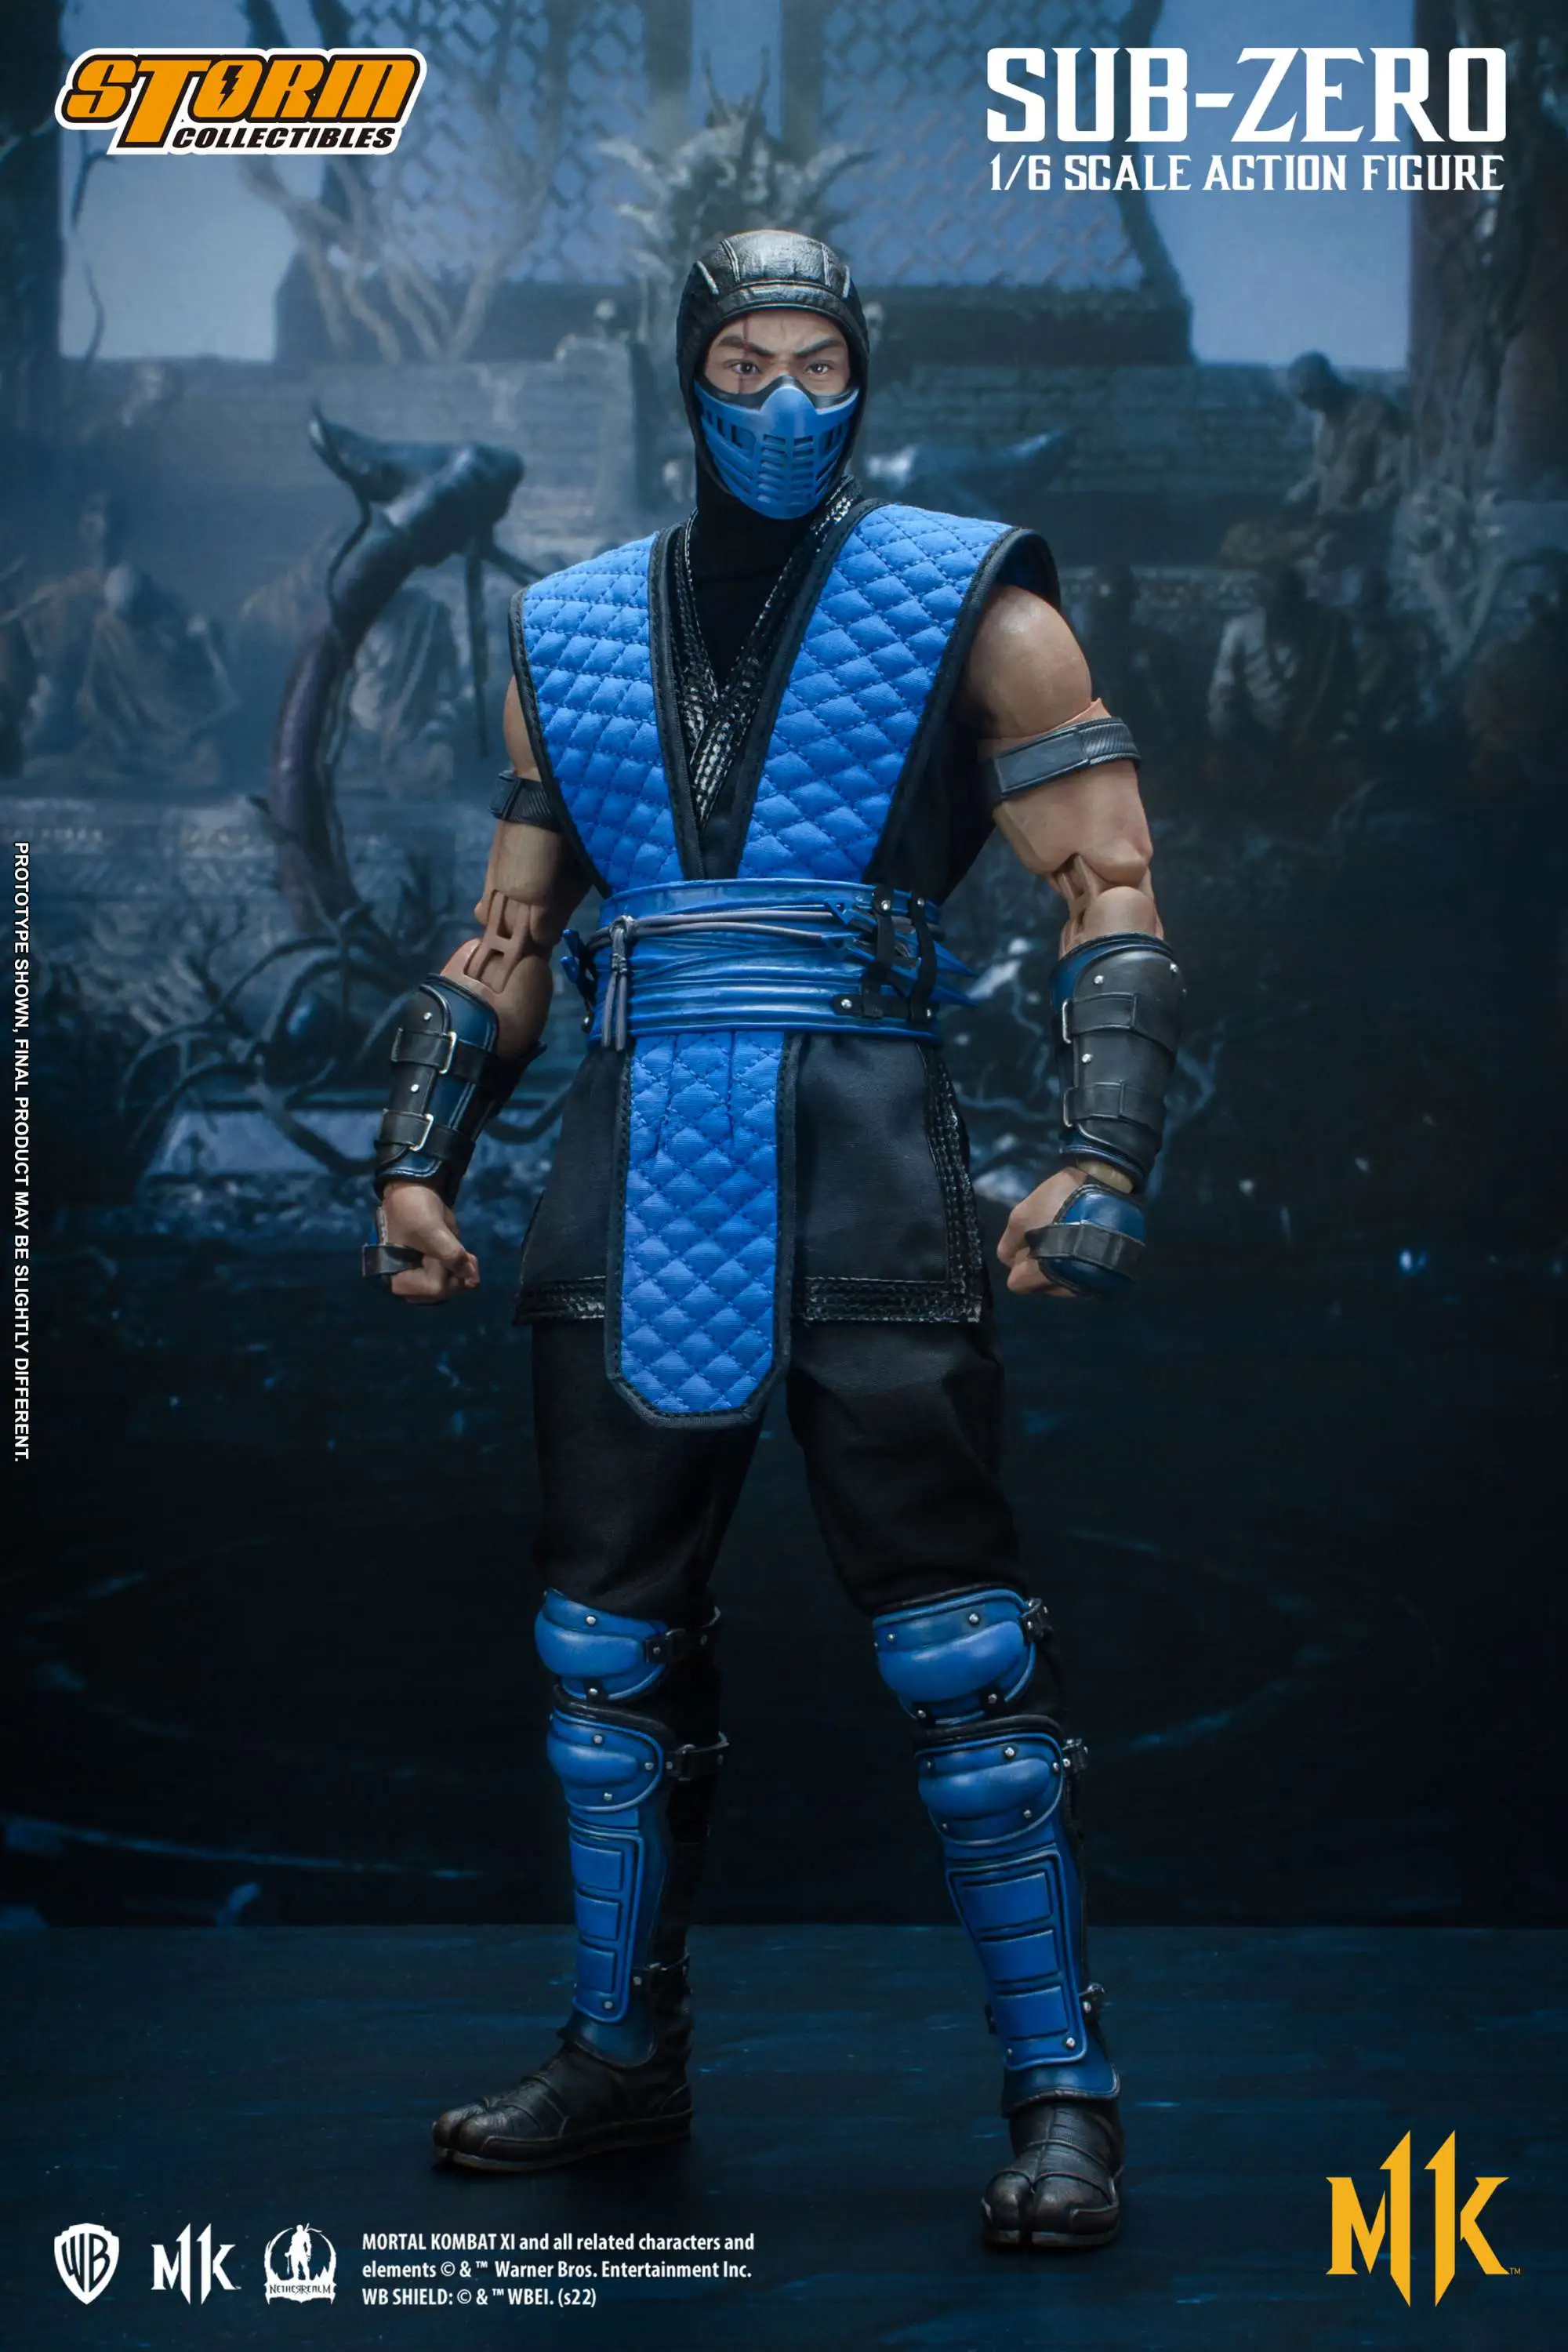 Pre-order Storm Collectibles KANO - Mortal Kombat 1/12 Action Figure